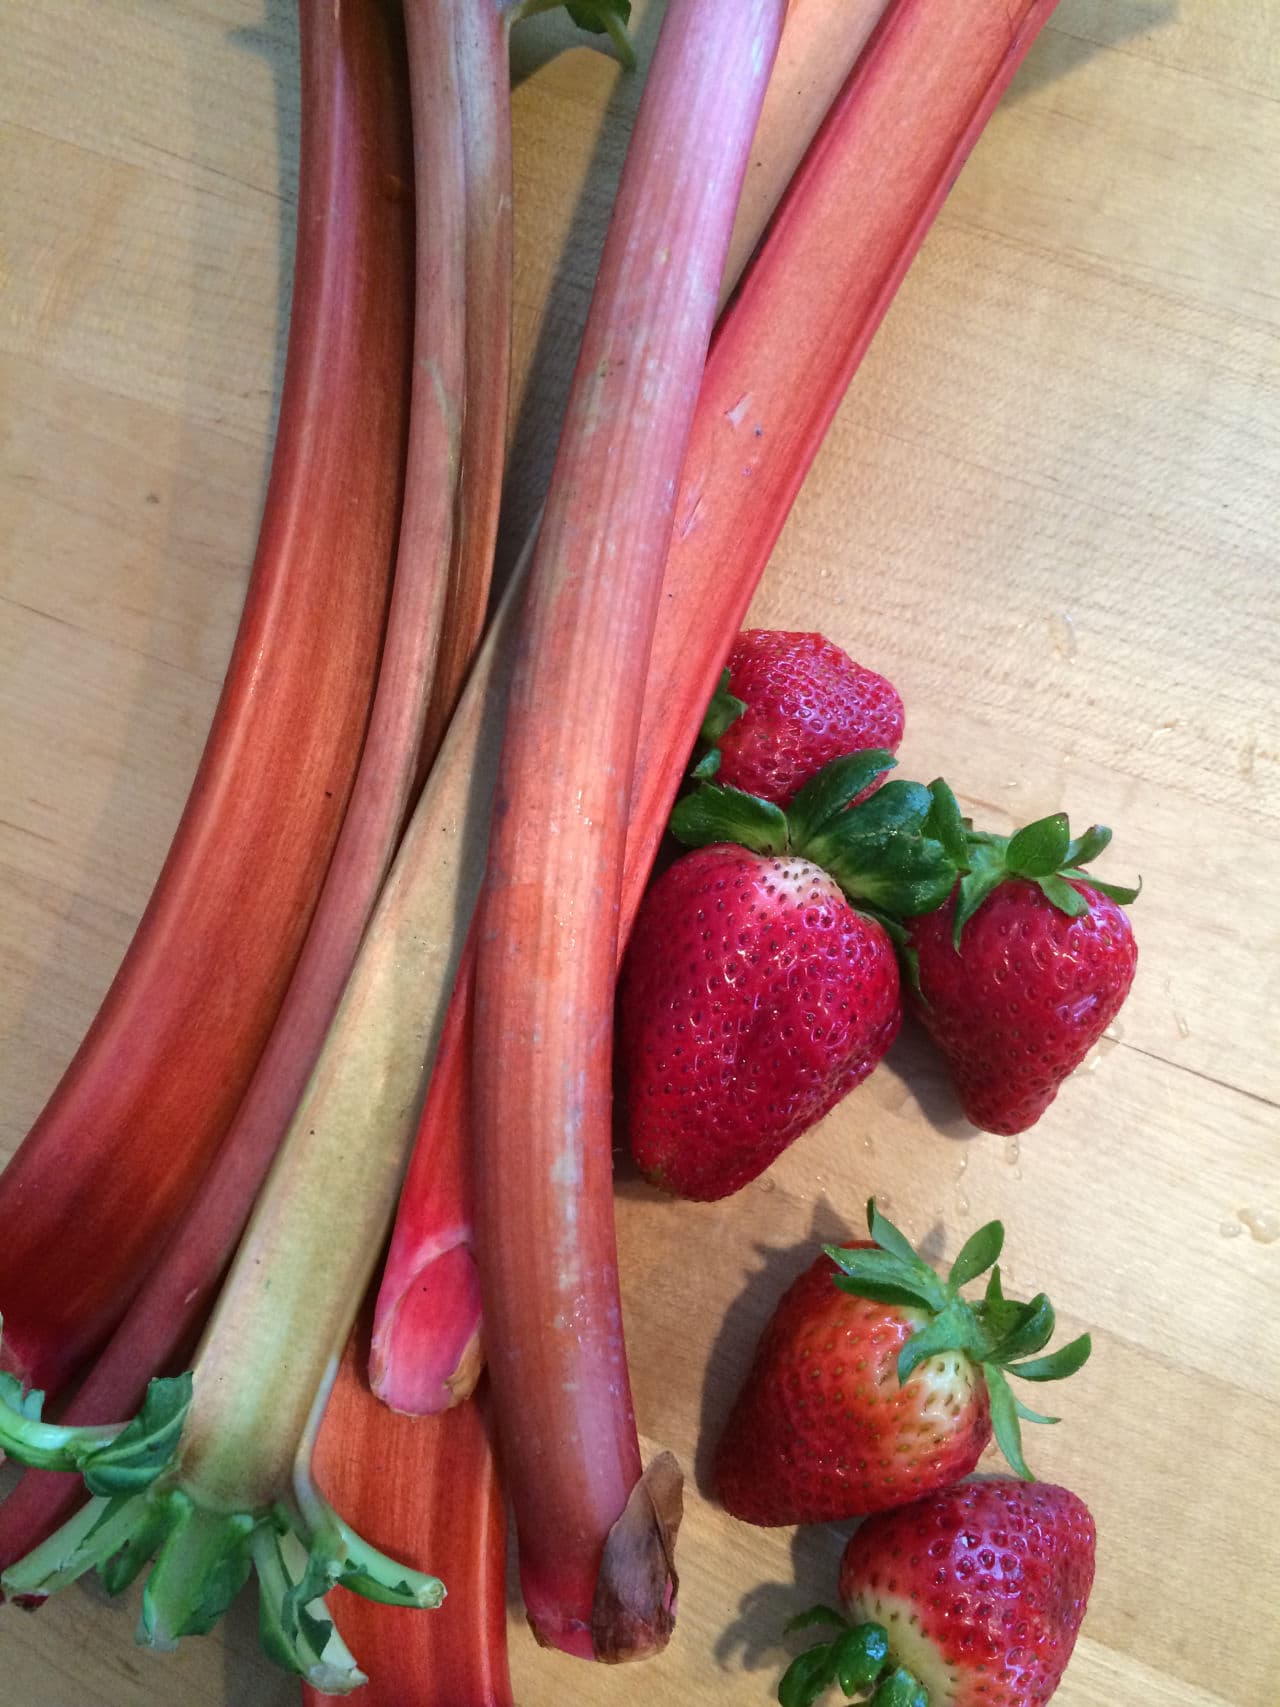 Strawberries and rhubarb. (Kathy Gunst)